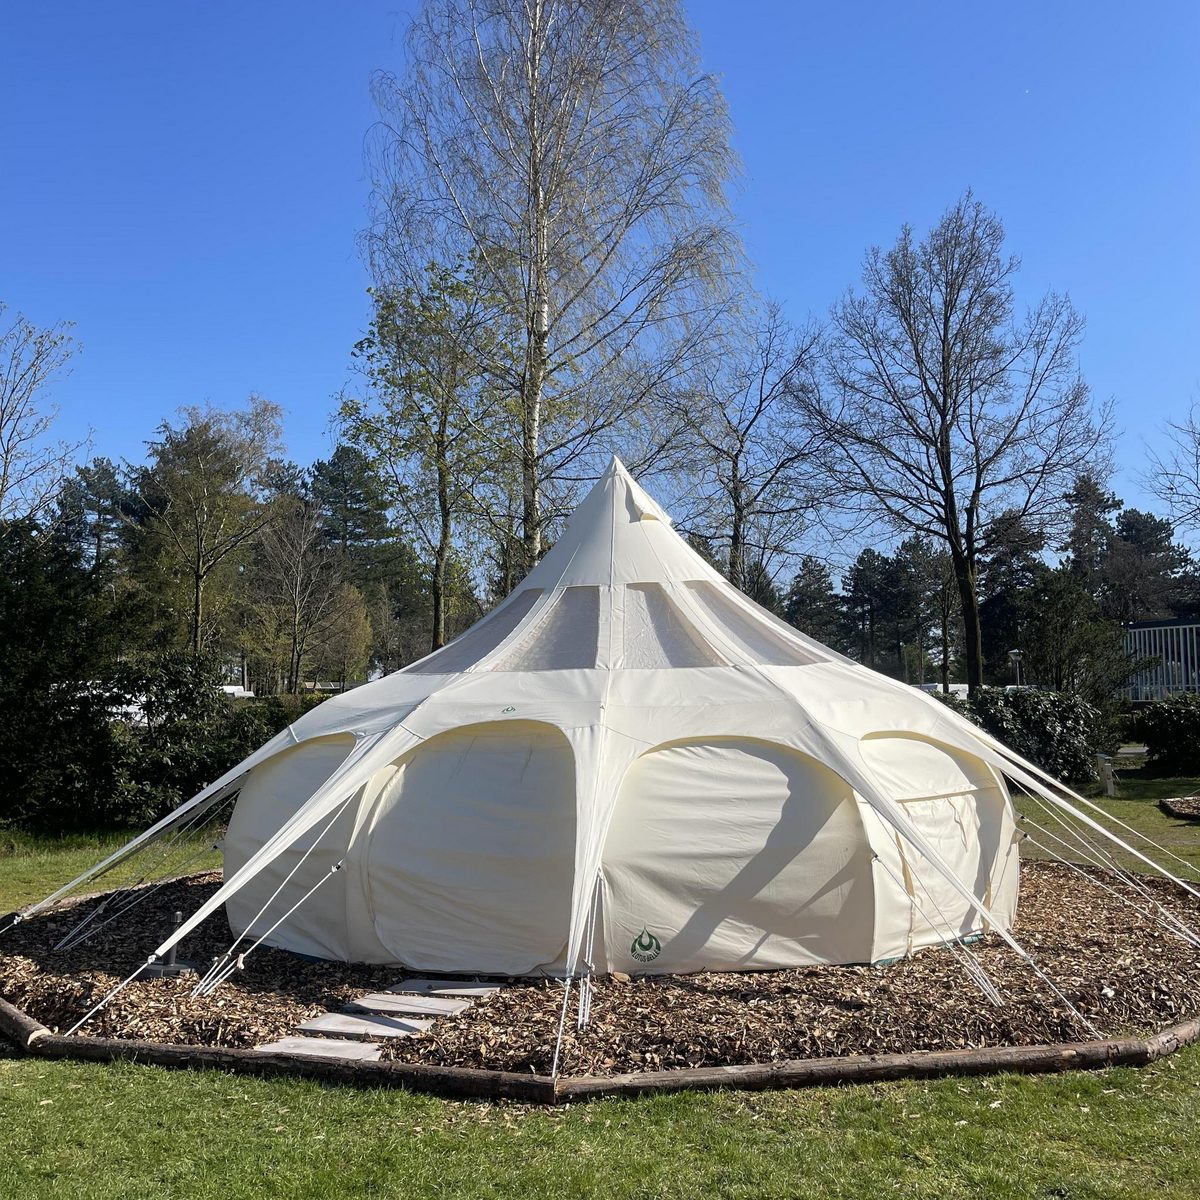 Lotus Belle tent